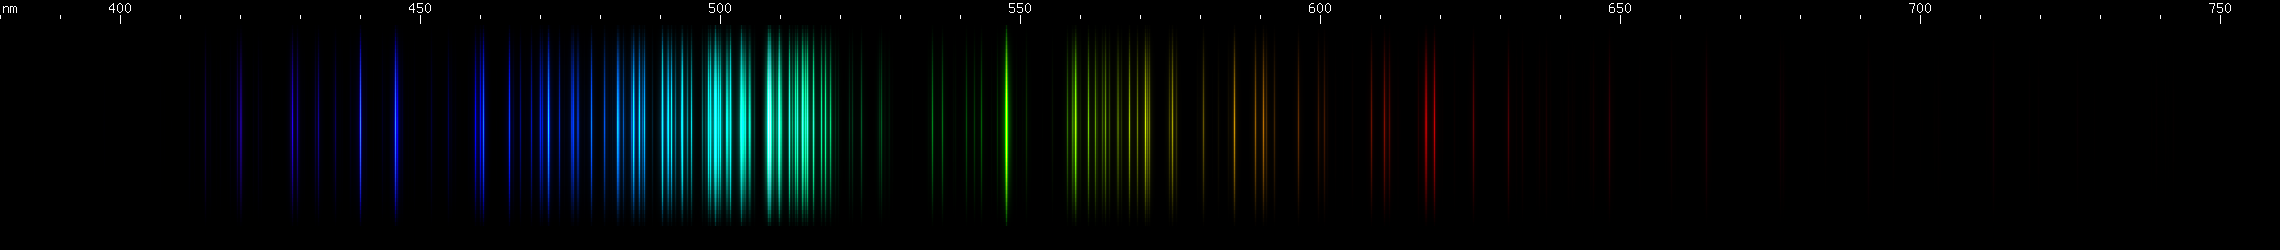 Spectral Lines of Nickel